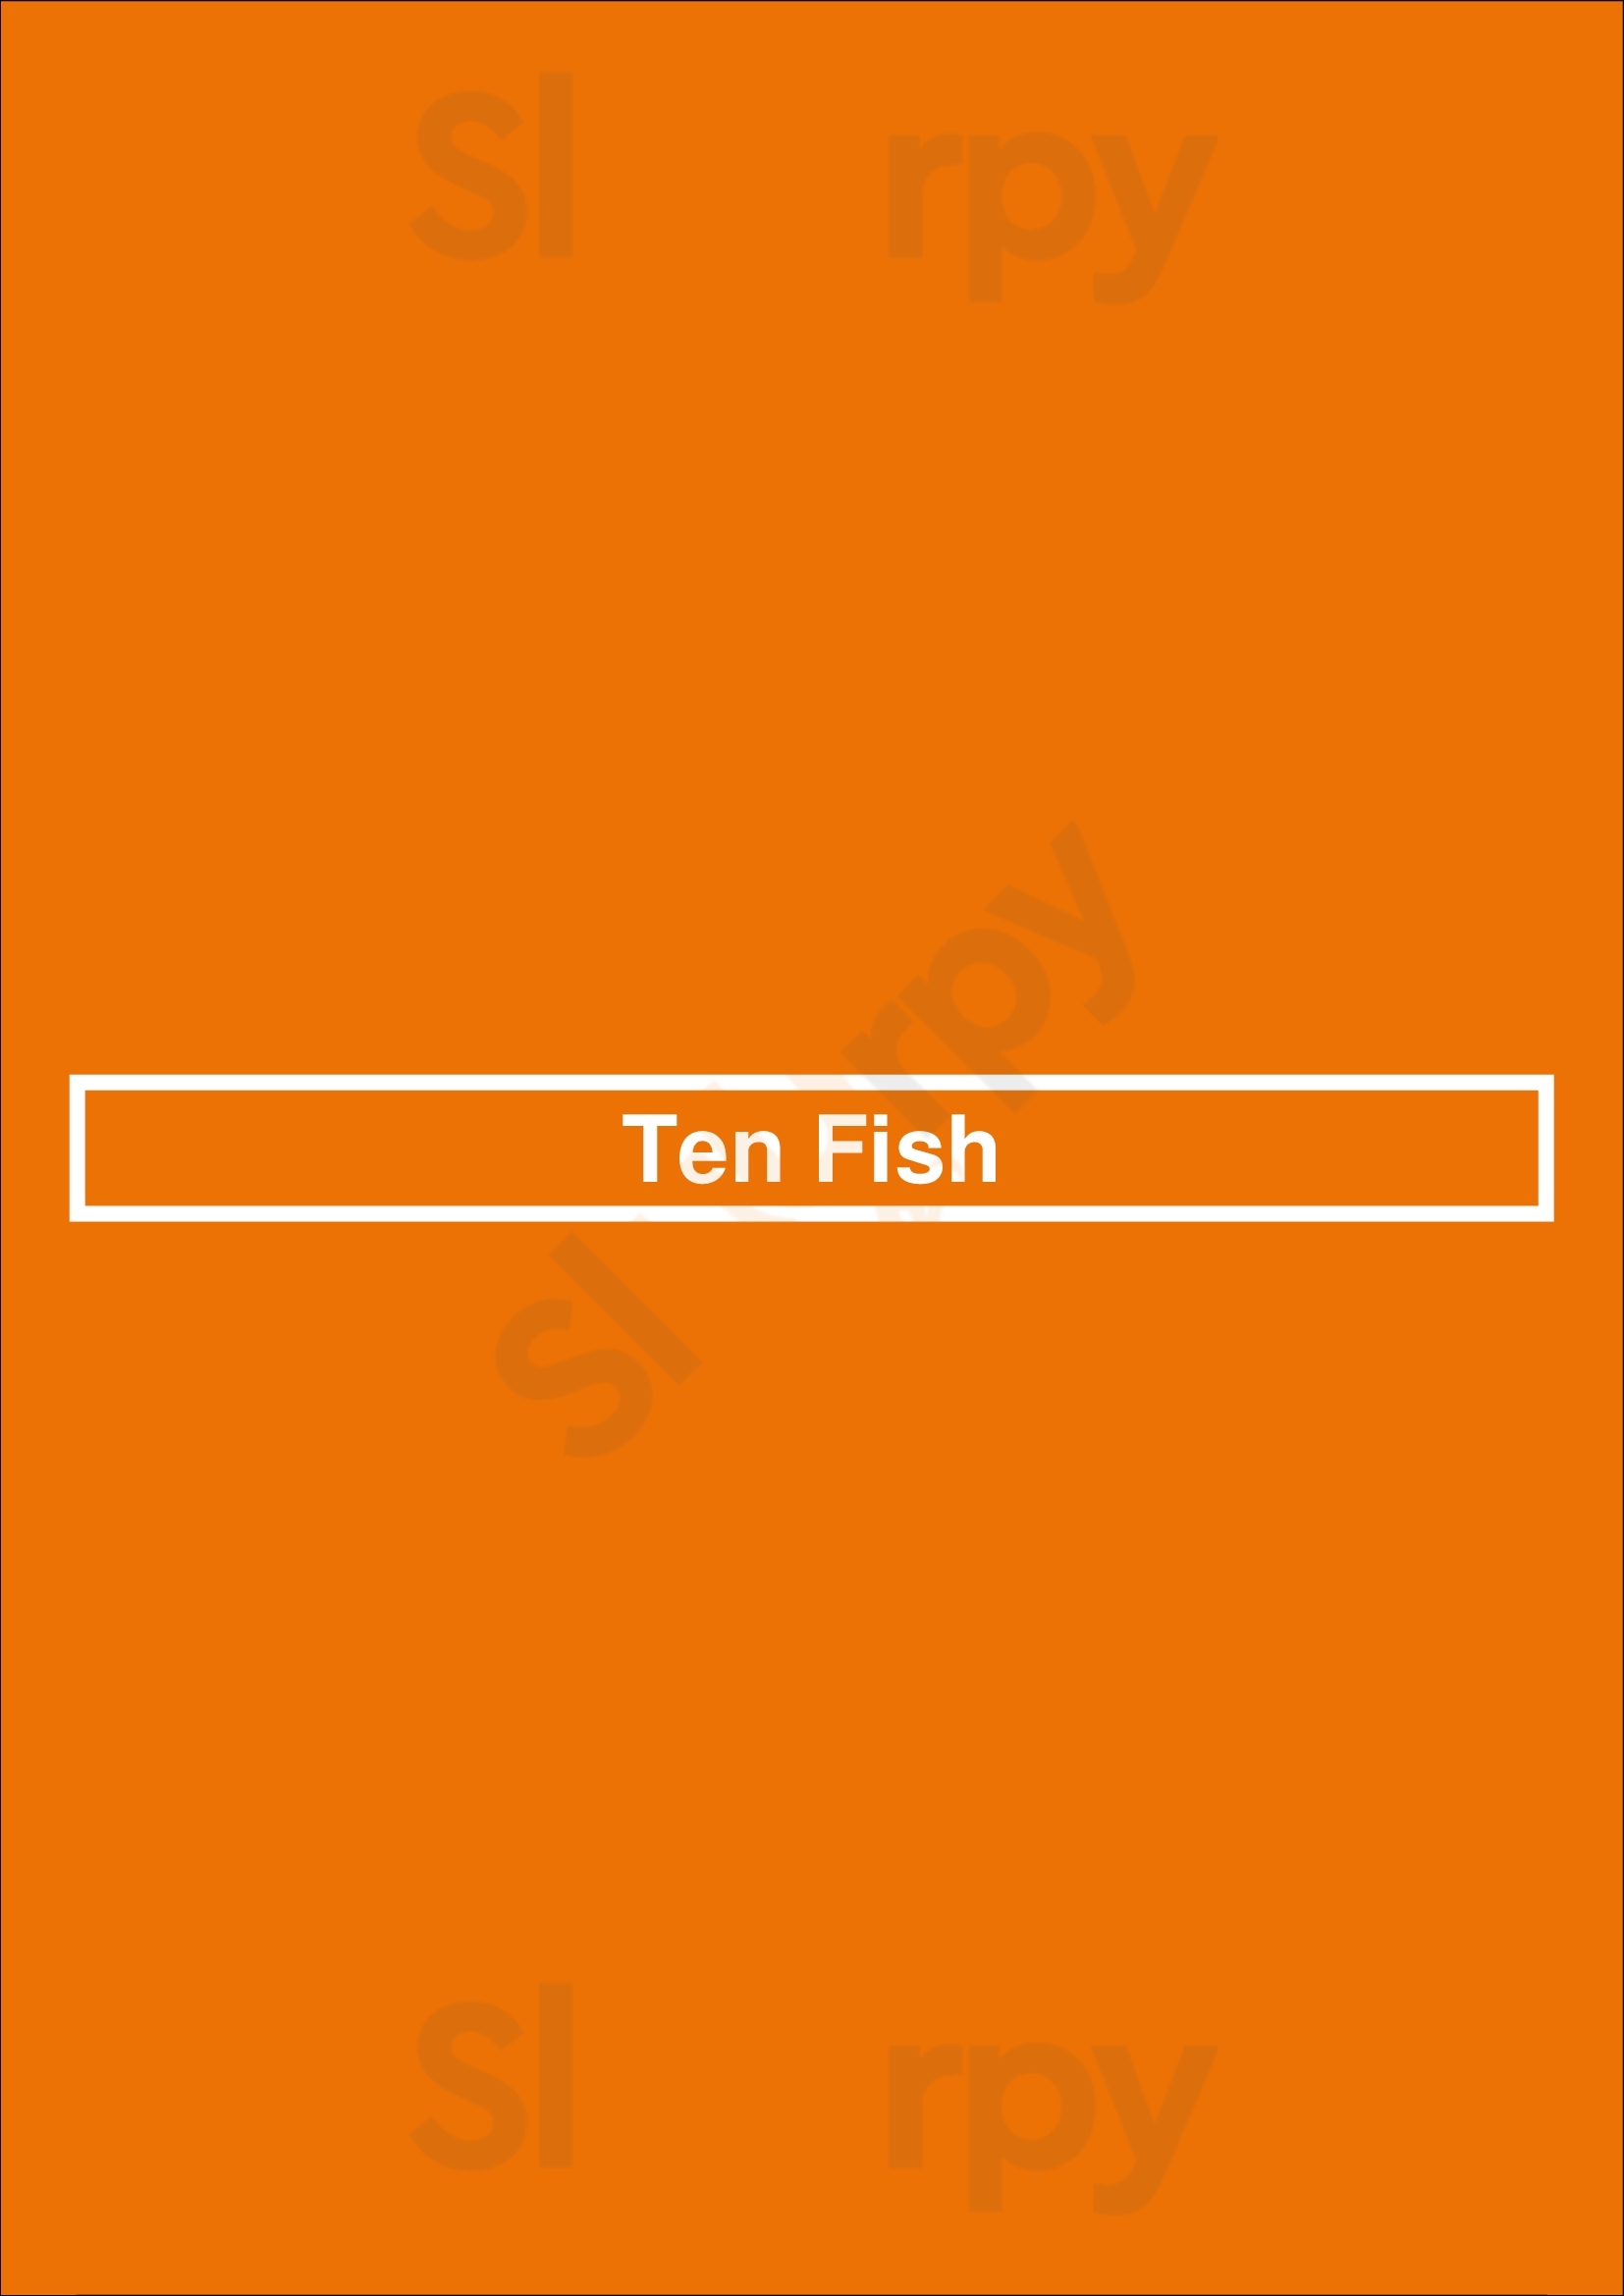 Ten Fish Ottawa Menu - 1